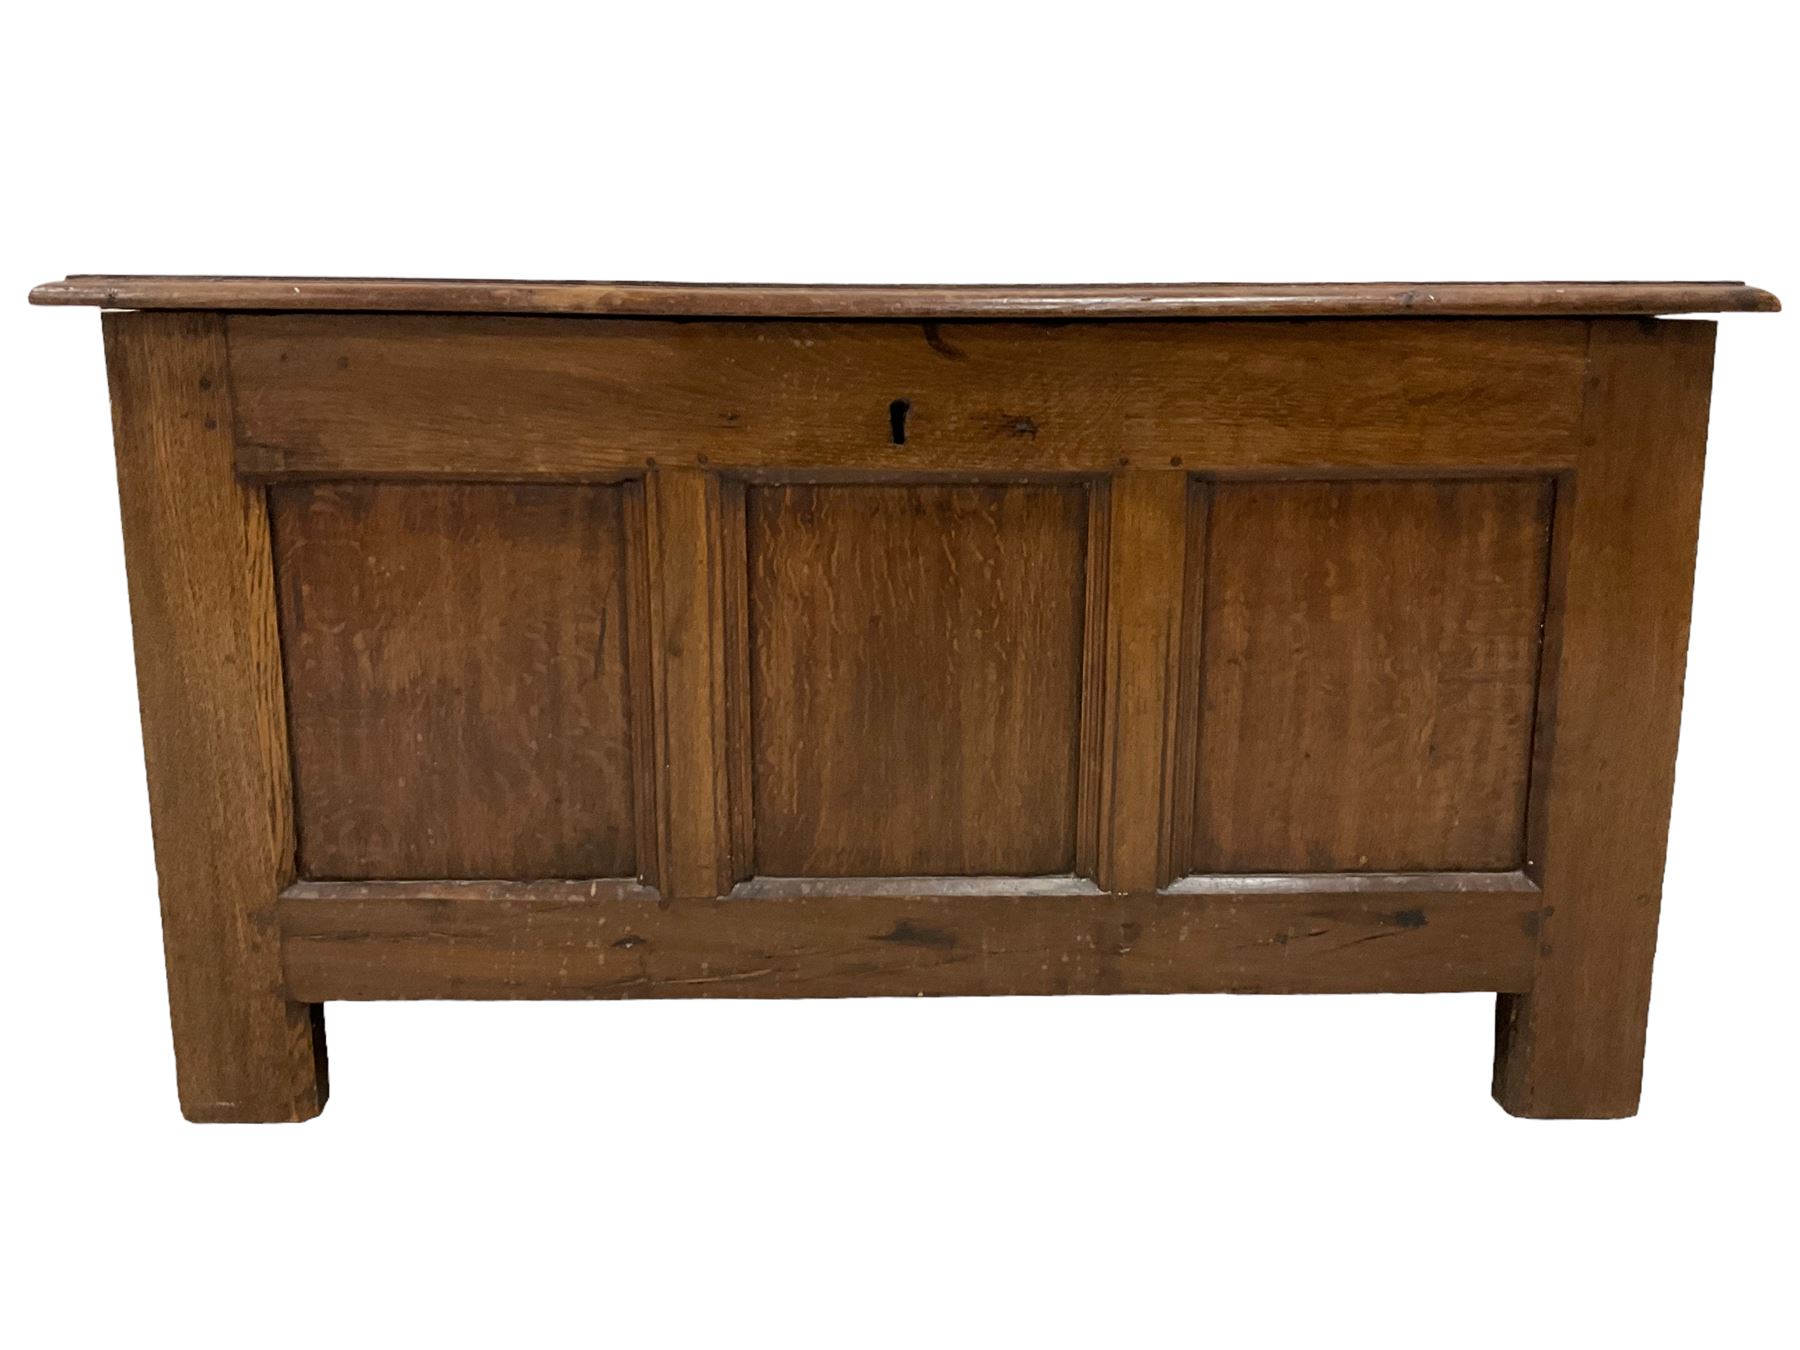 George III oak blanket chest - Image 2 of 4